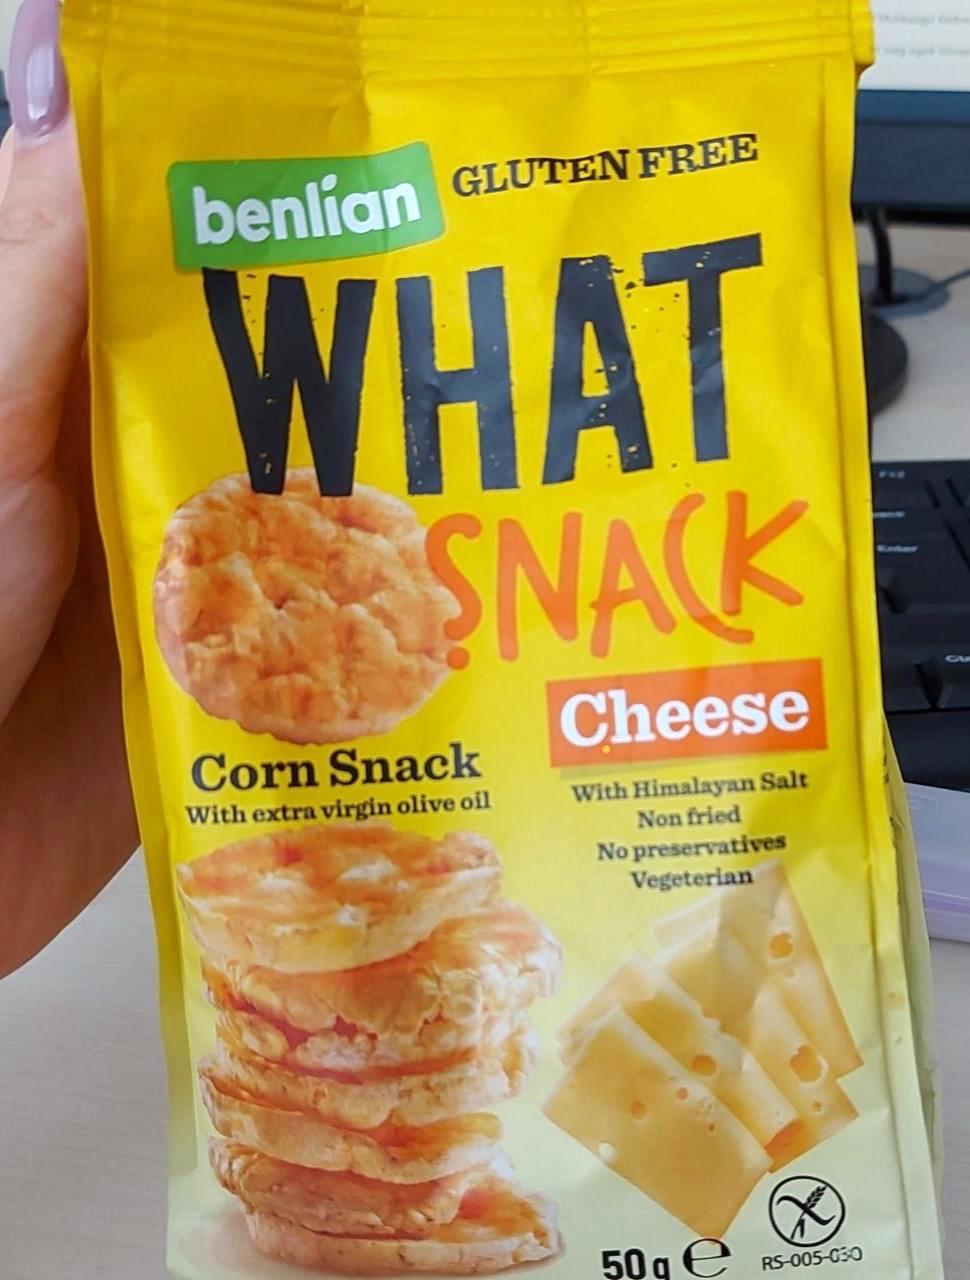 Képek - What snack Cheese Benlian